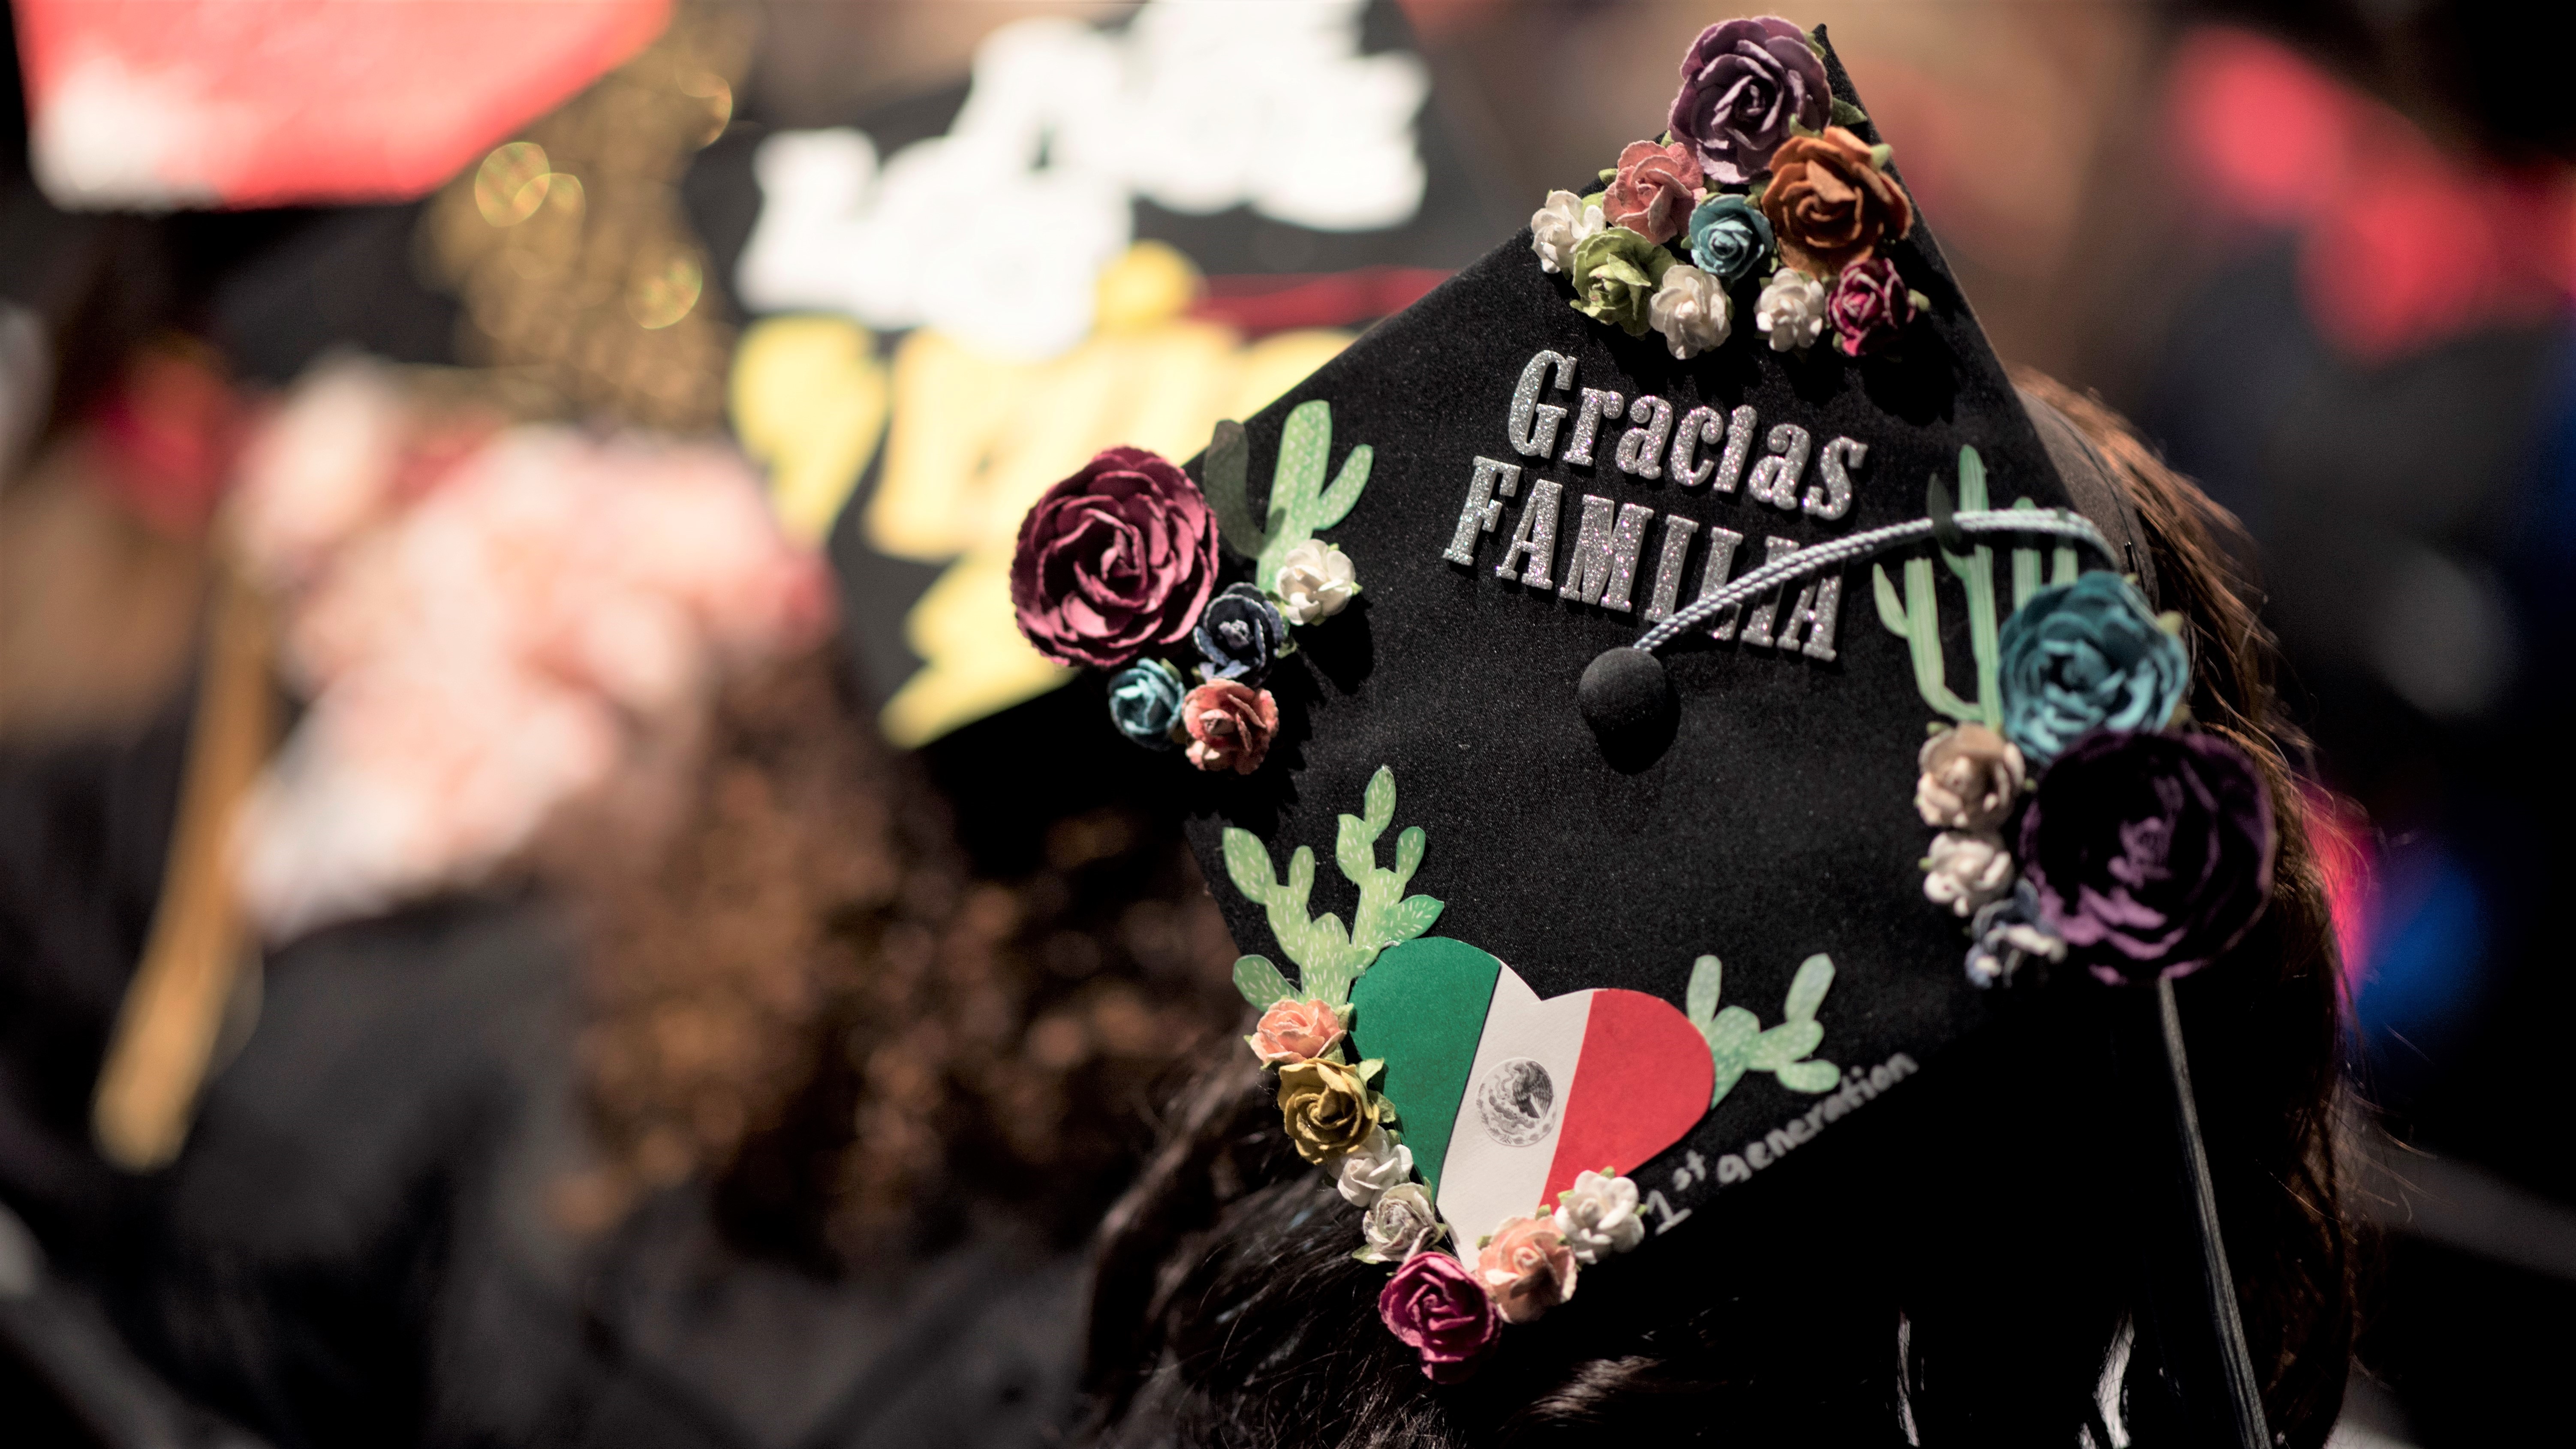 graduation hat from Latinx graduation that says "Gracias Familia"